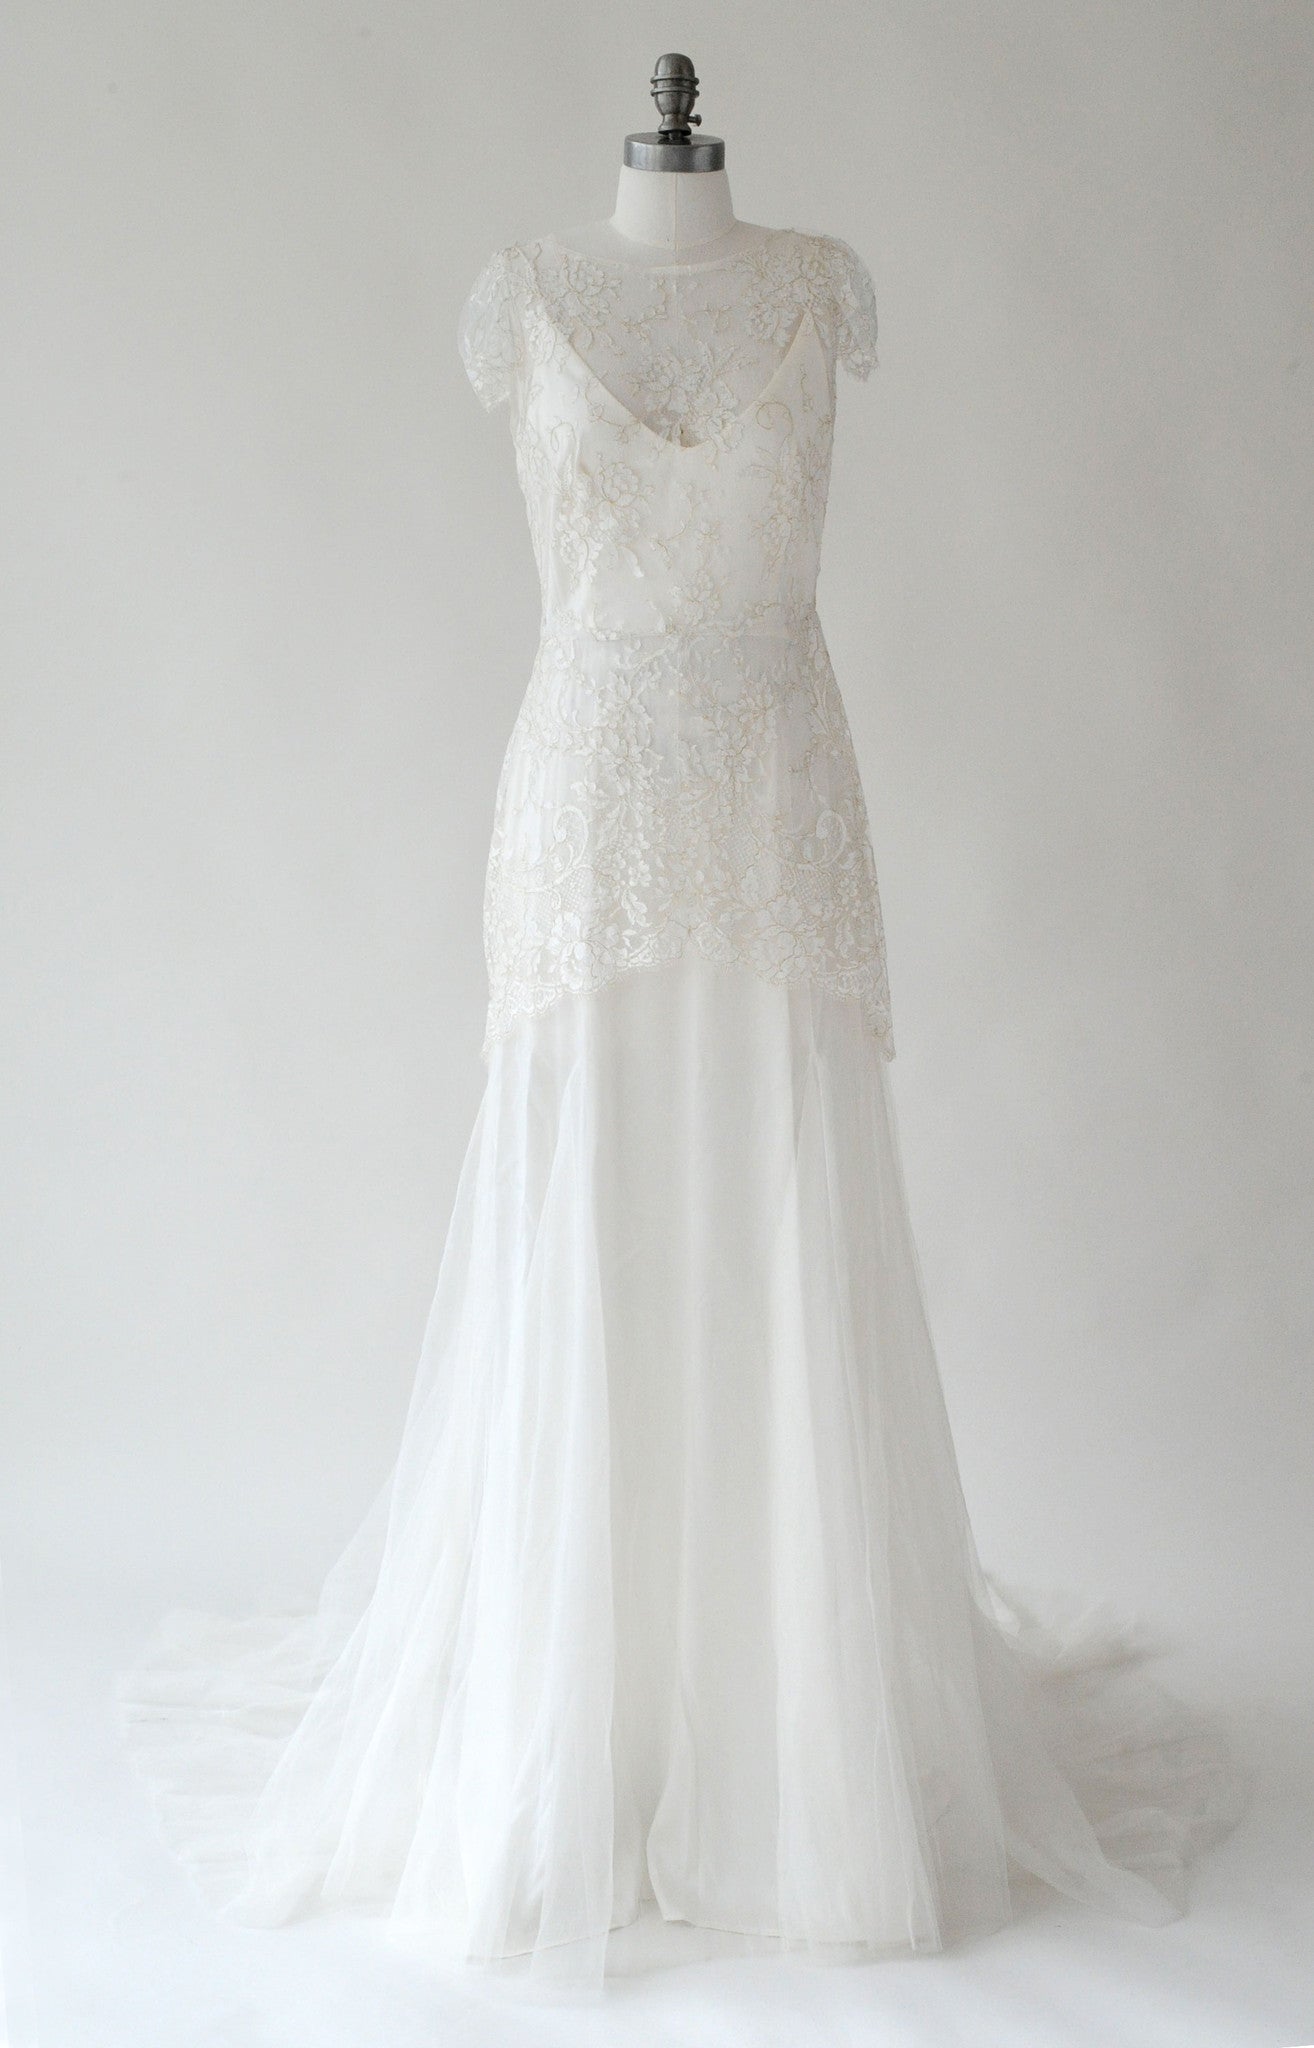 Gowns - Bridal gowns, wedding dresses, lace dresses | Twigs & Honey ®, LLC